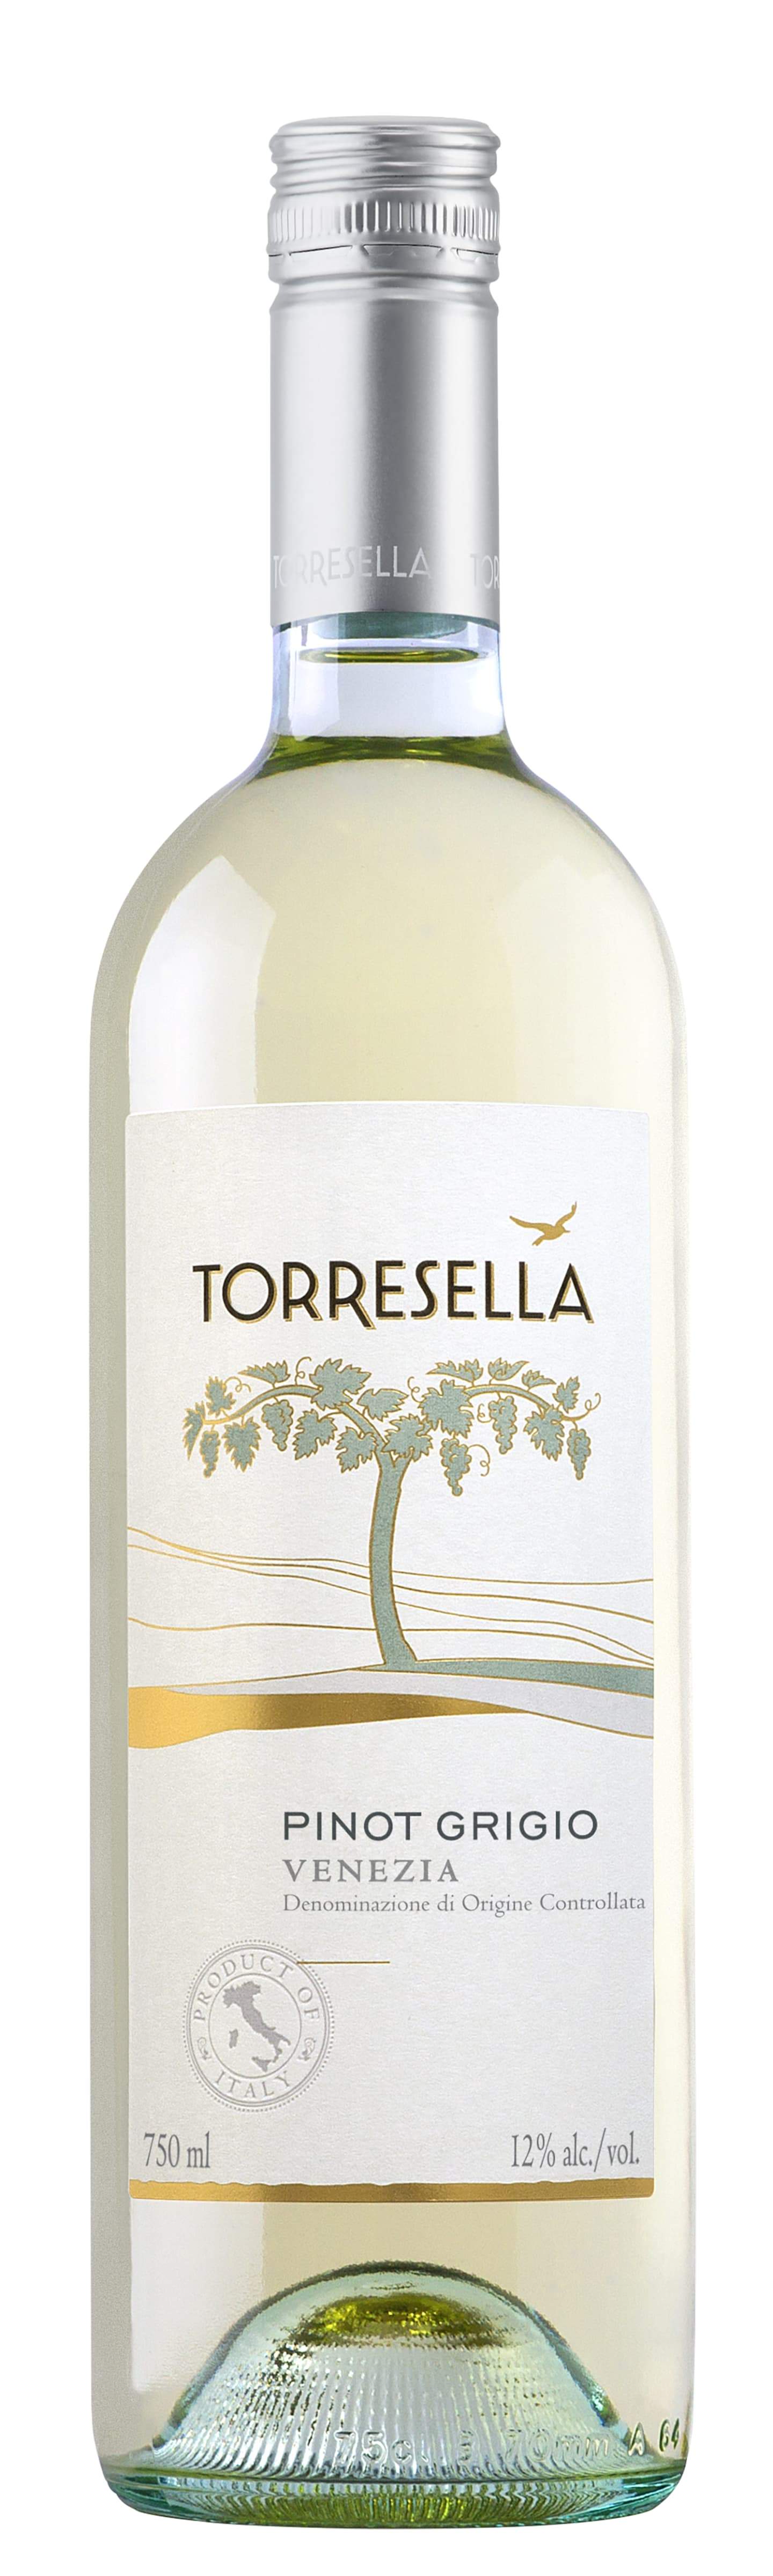 Torresella Pinot Grigio 2019